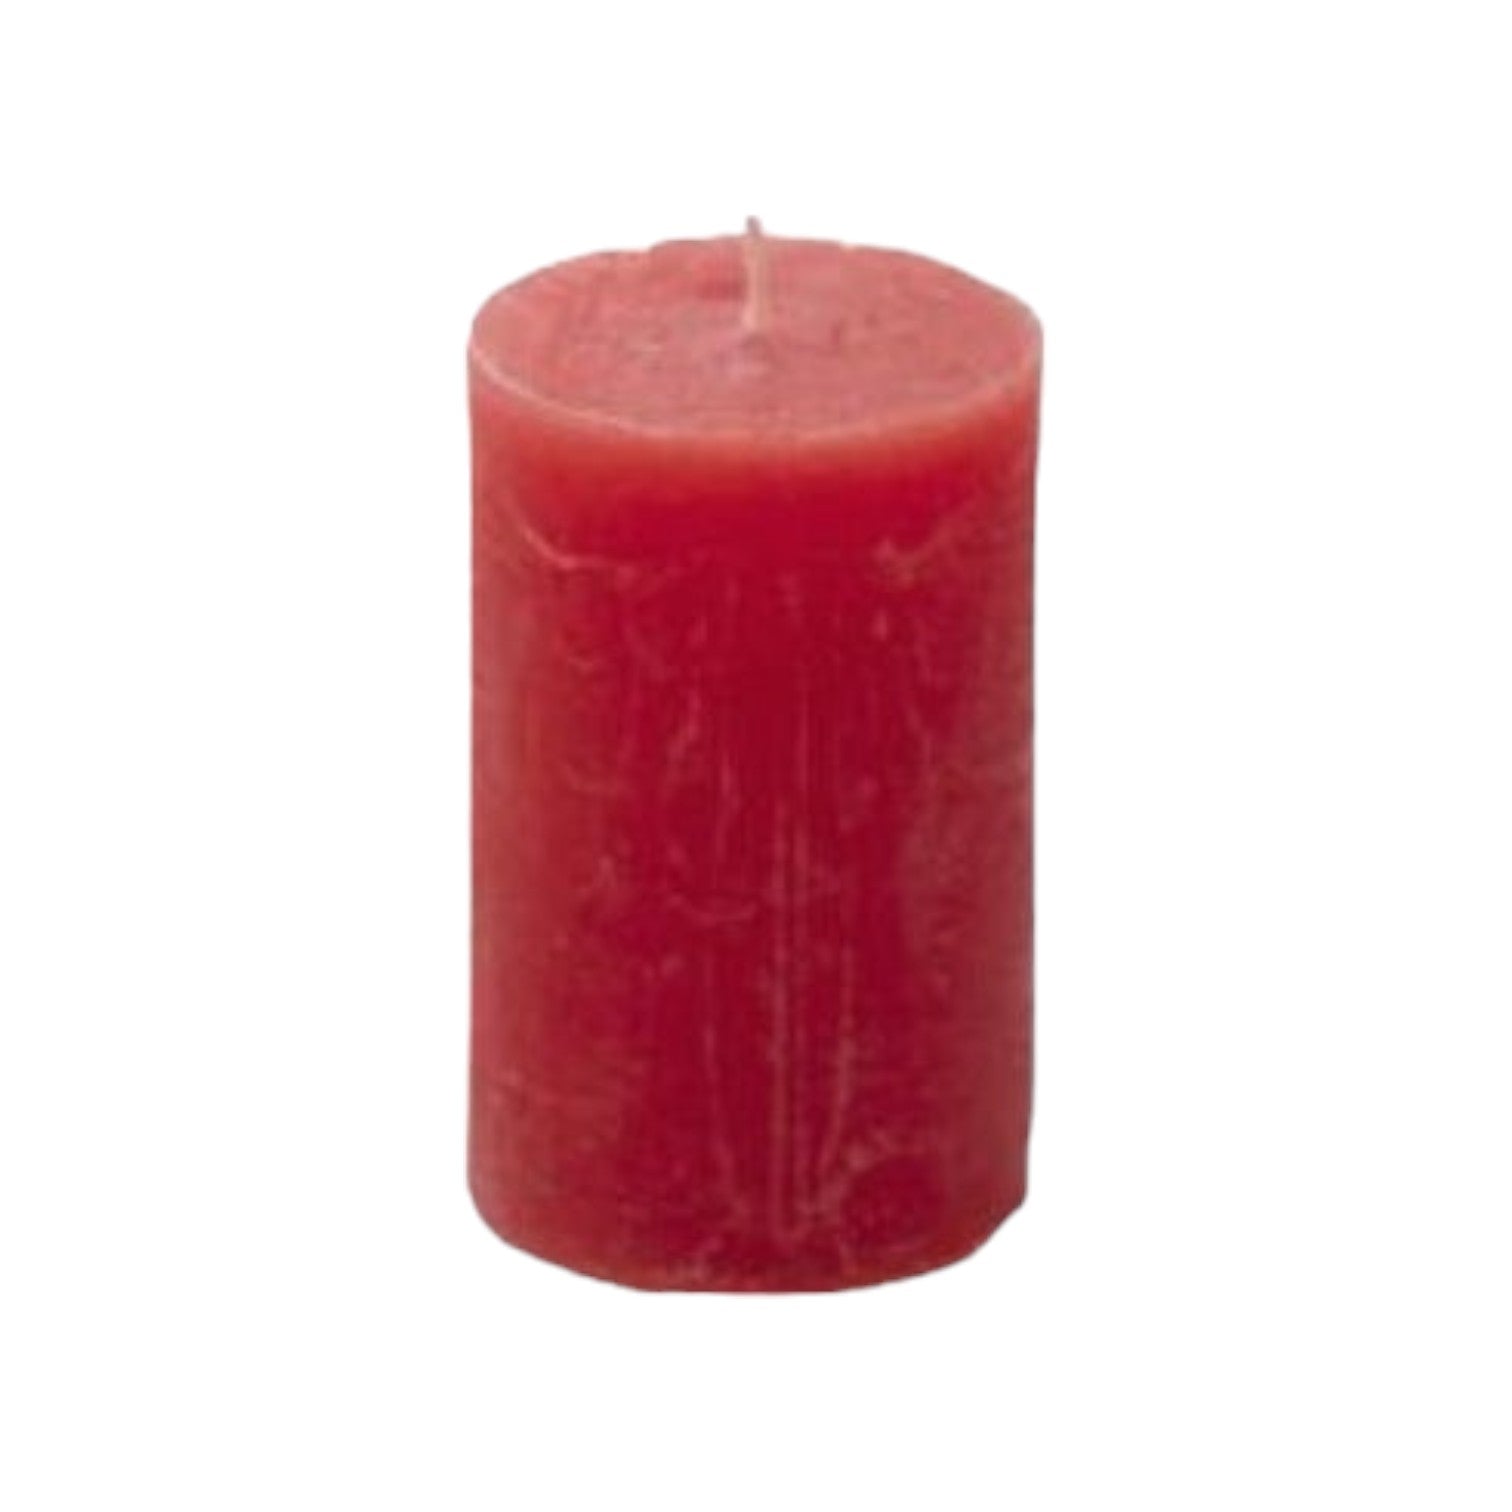 Branded By - Kaarsen 'Pillar' (Ø5cm x 8cm) - Post Red (set van 9)